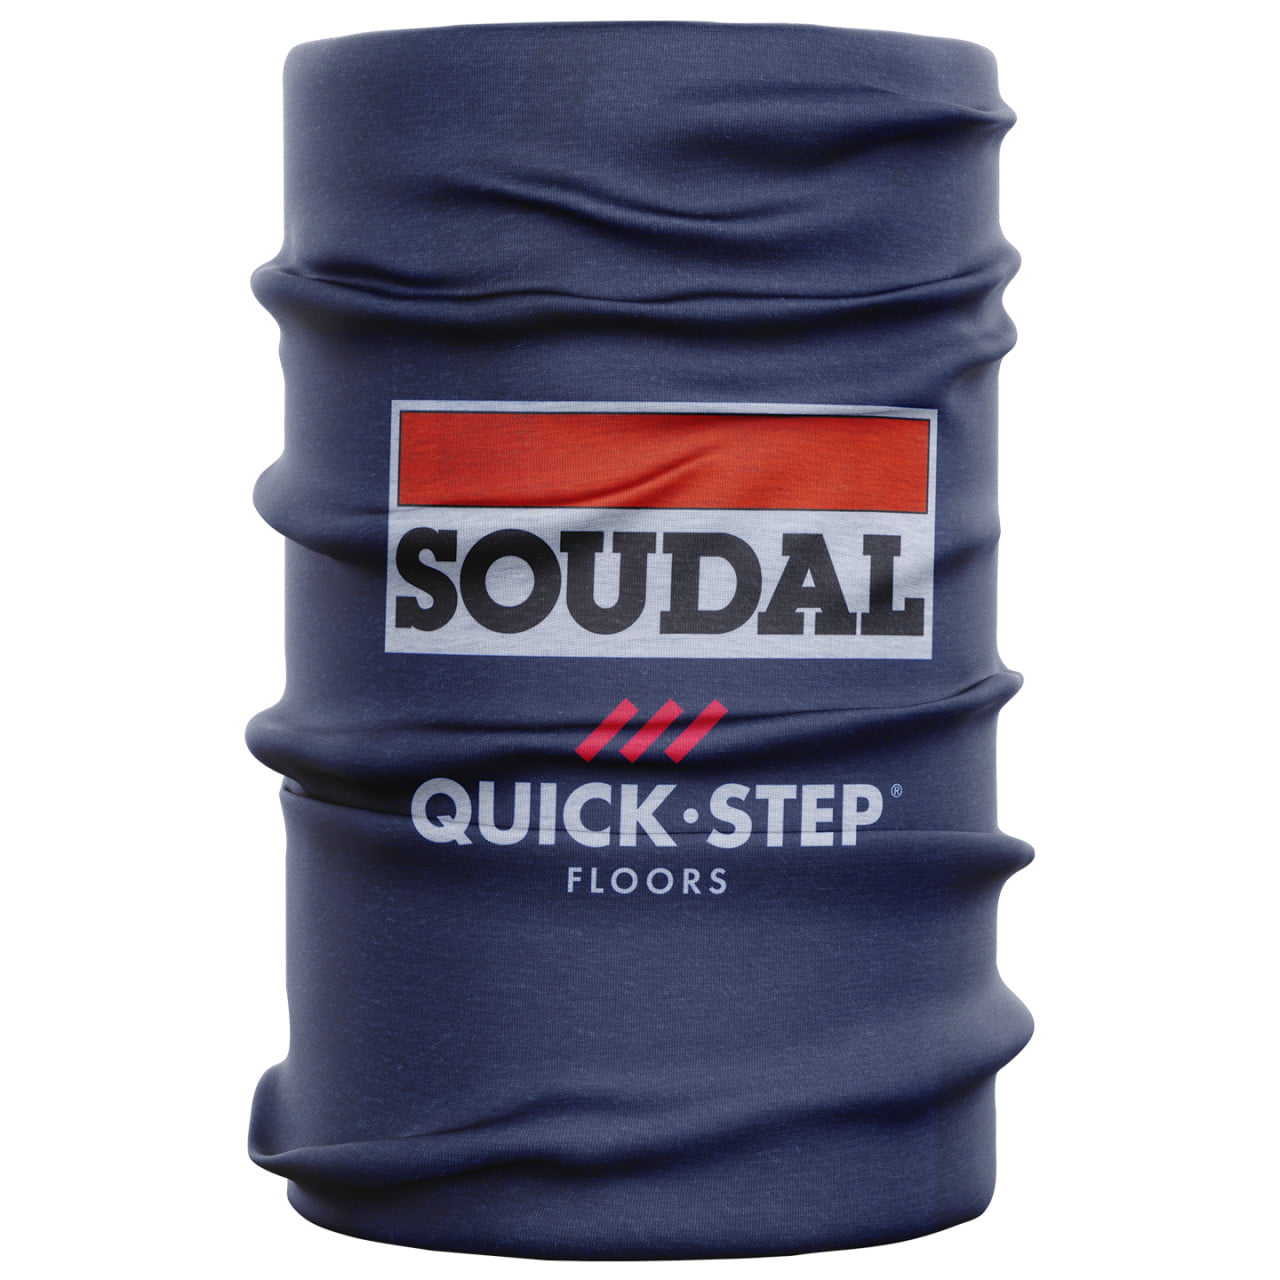 SOUDAL QUICK-STEP Multifunctional Headwear 2023